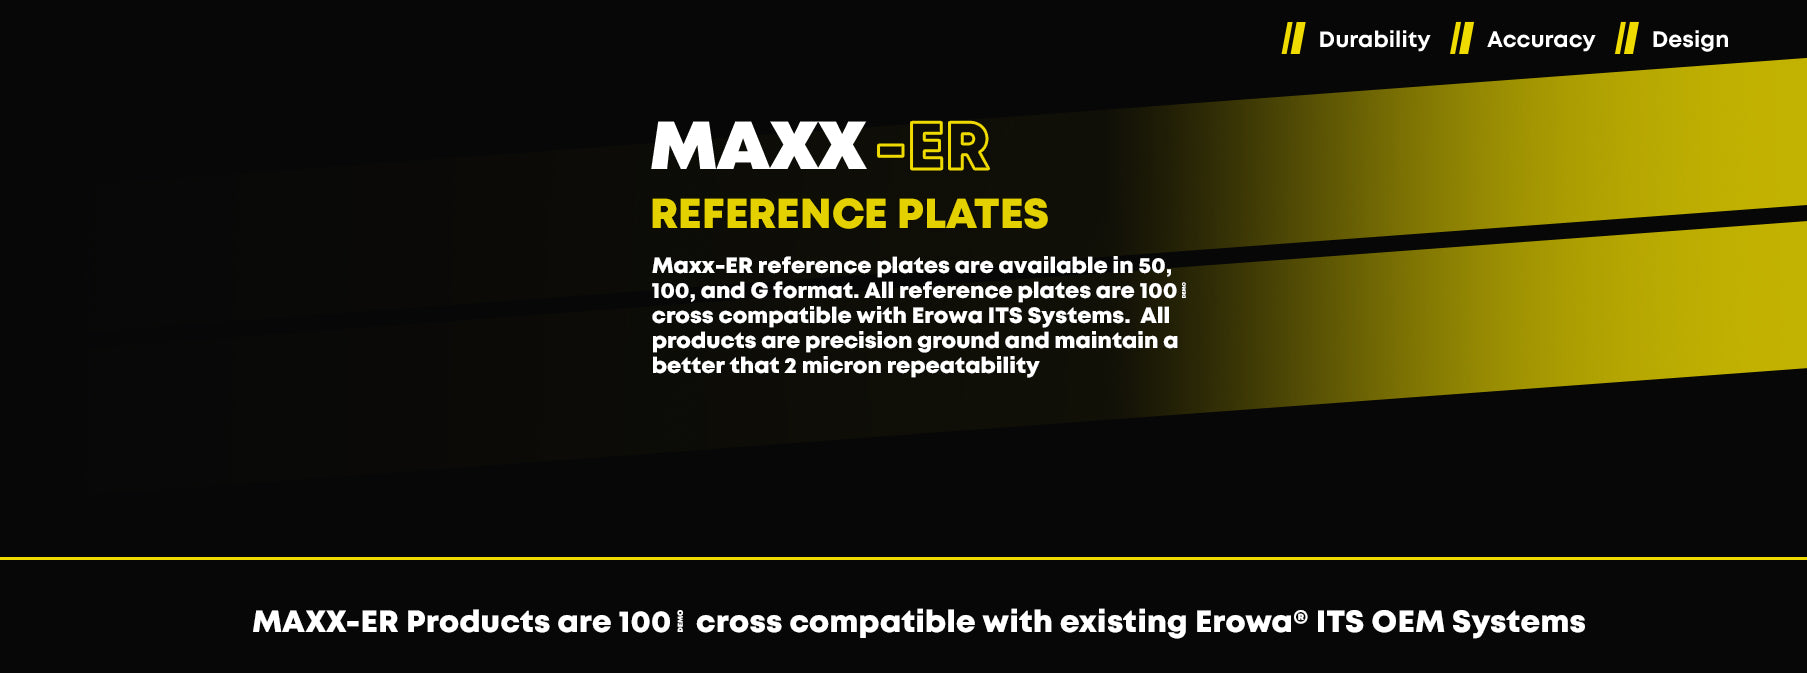 Maxx-ER reference plates, Erowa Plates